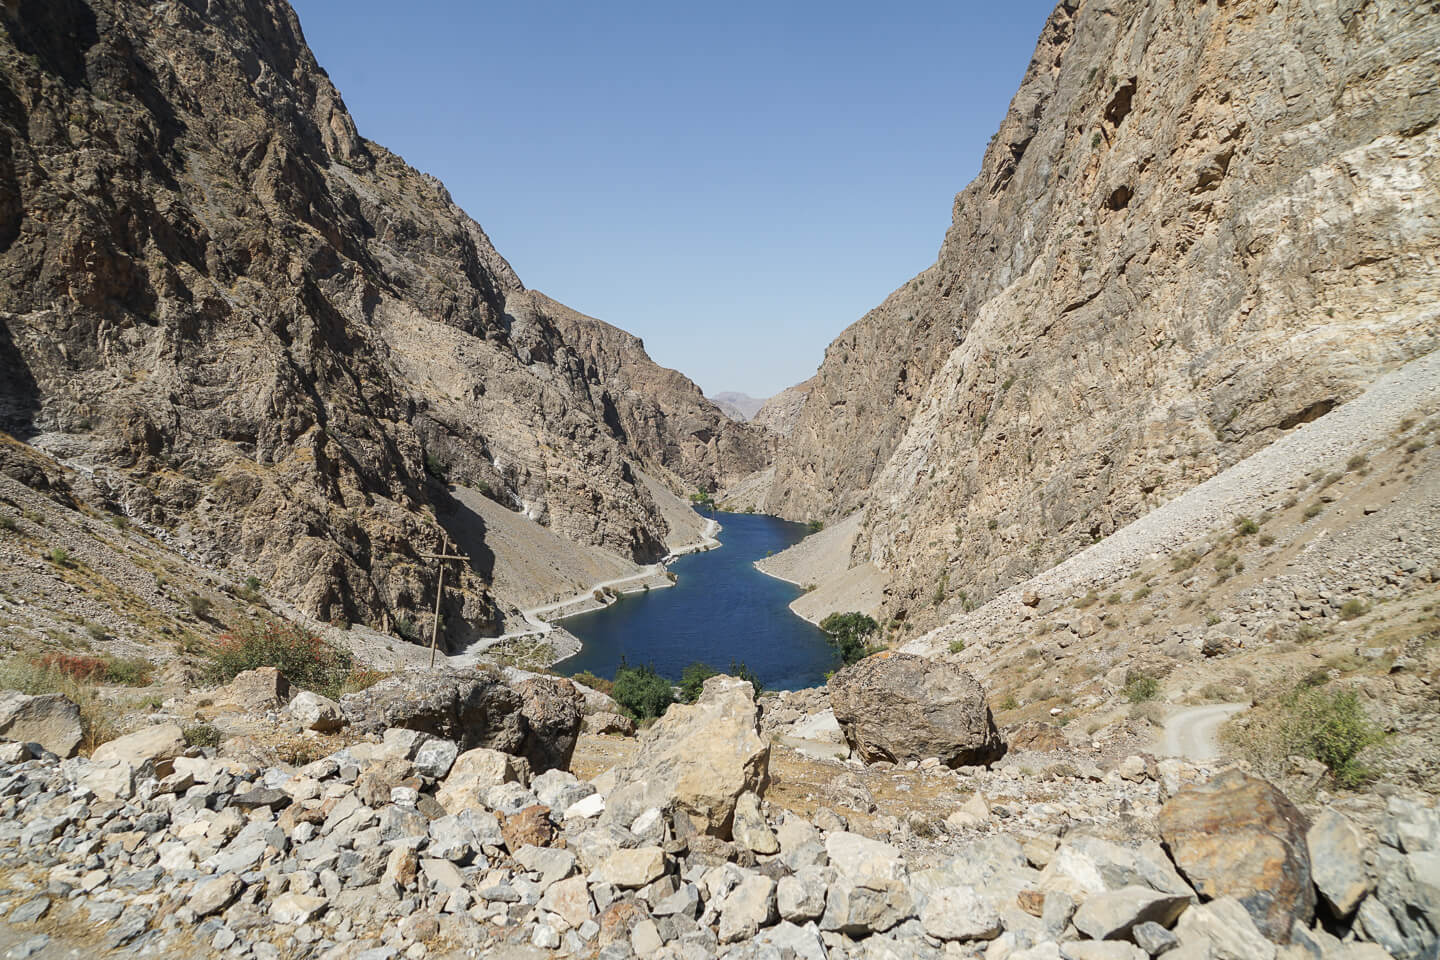 Second of seven lakes in Tajikistan